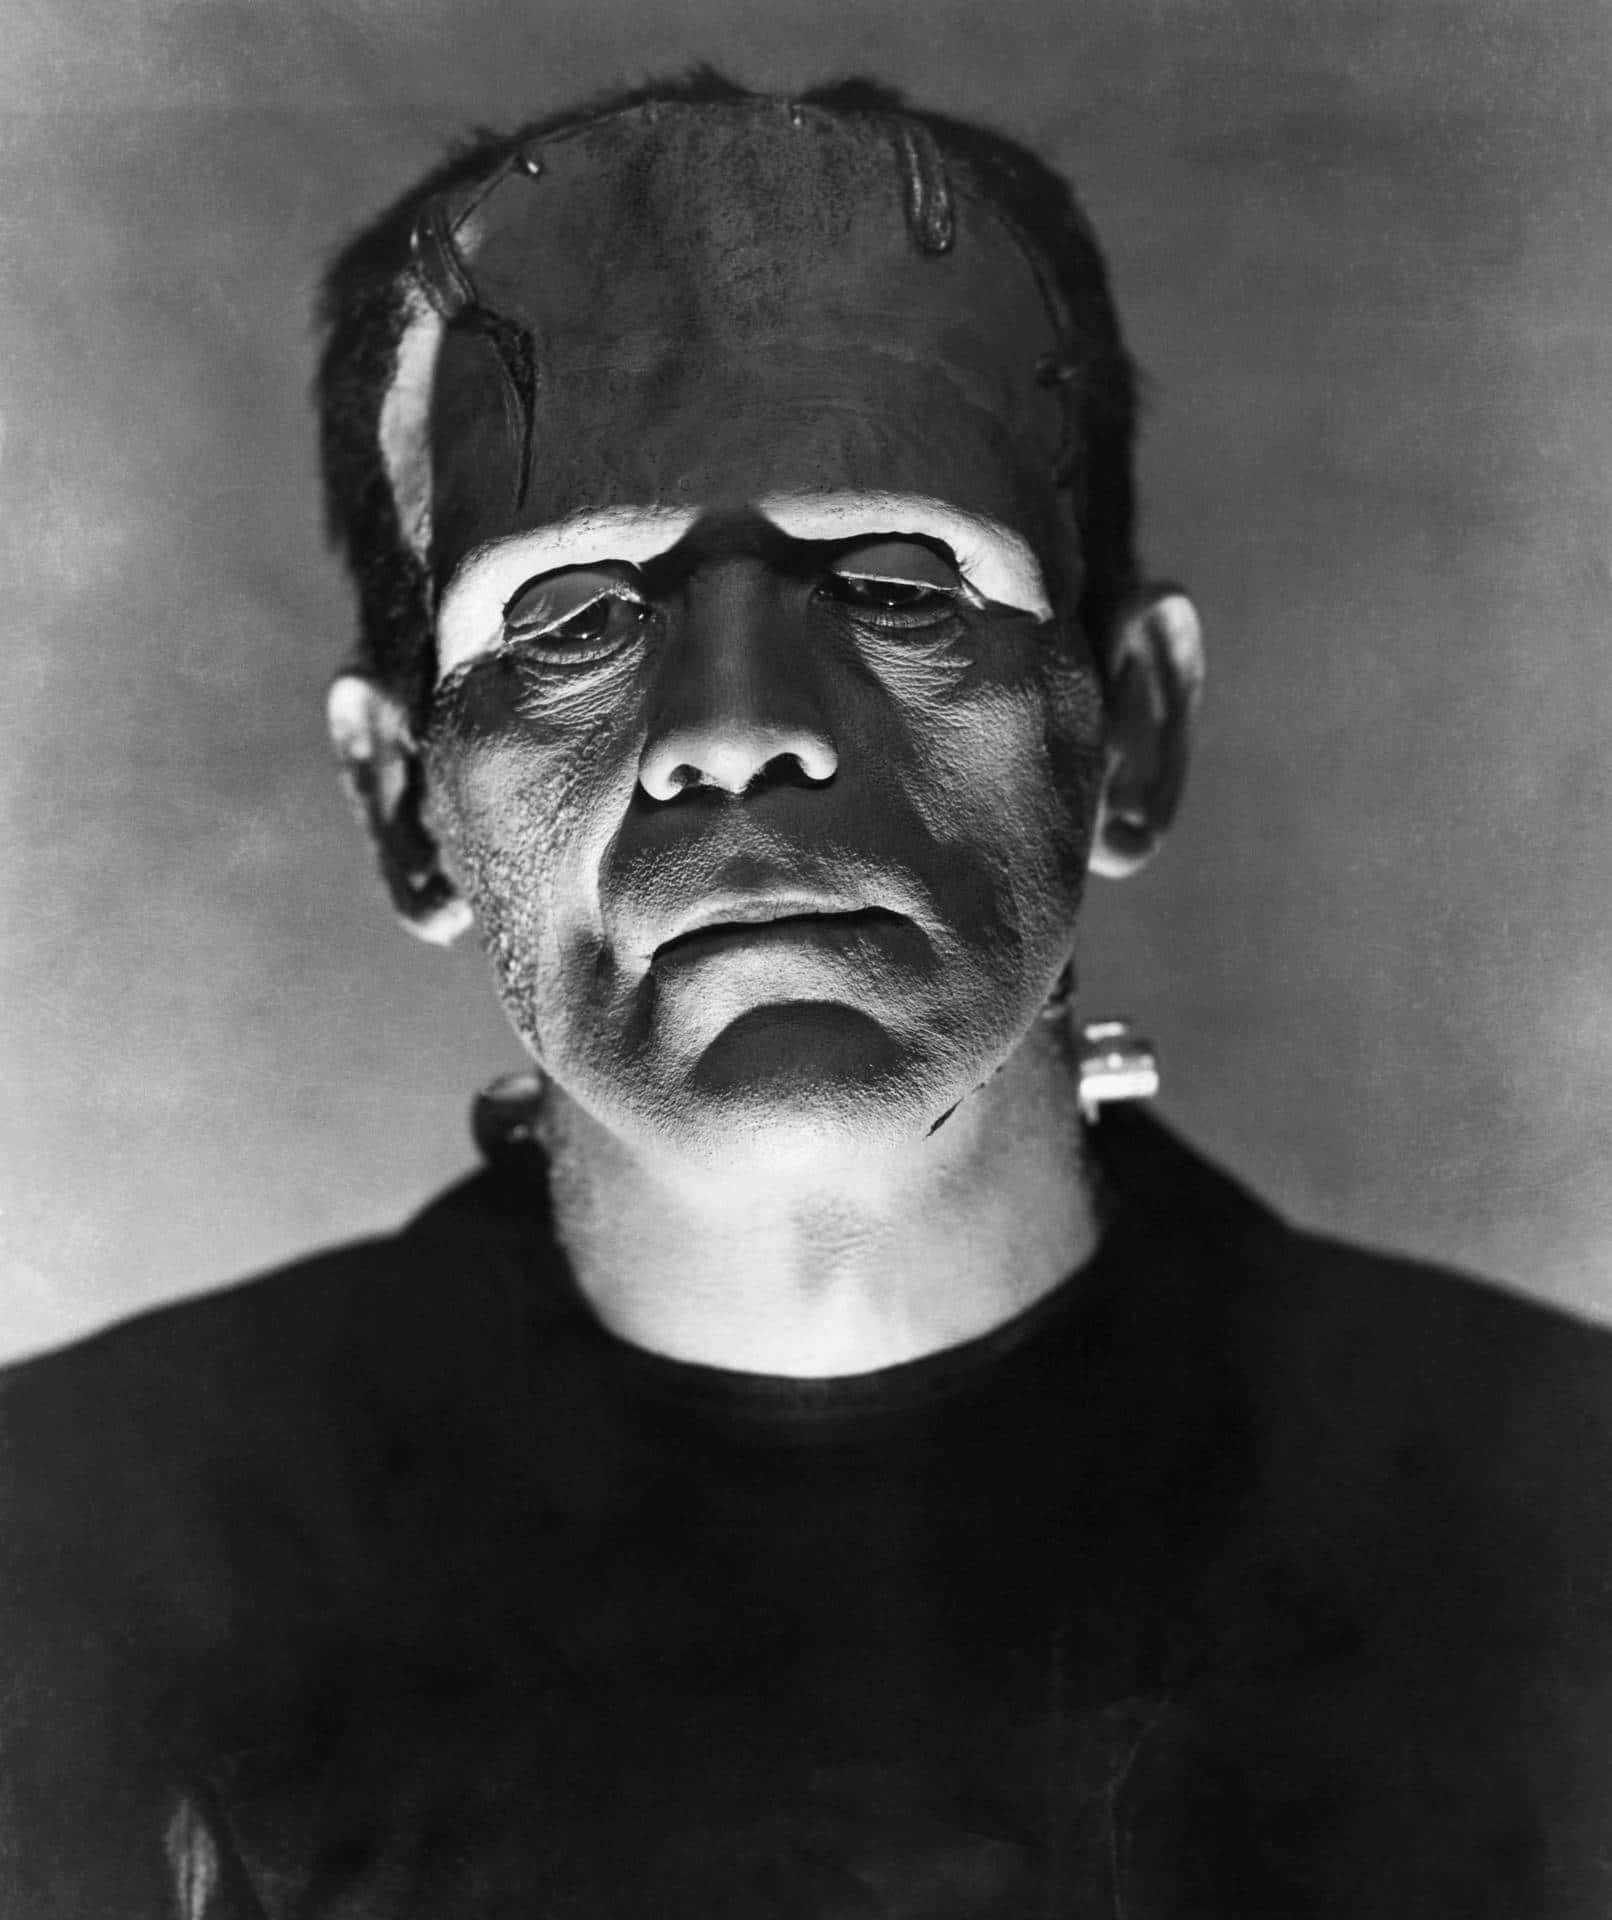 "Frankenstein - A Creation of Science"